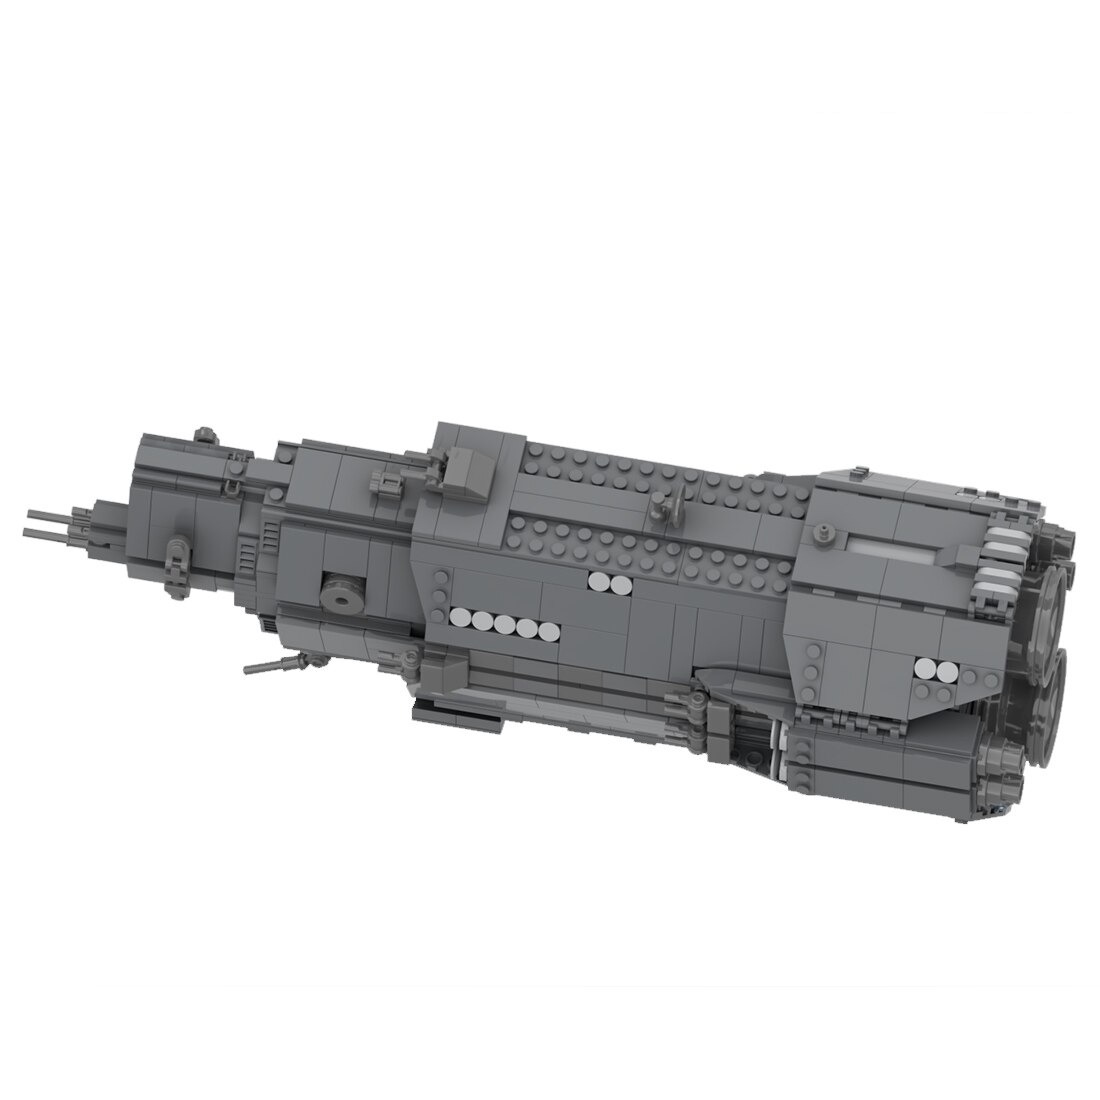 authorized moc 38471 light cruiser model main 4 - CADA Block